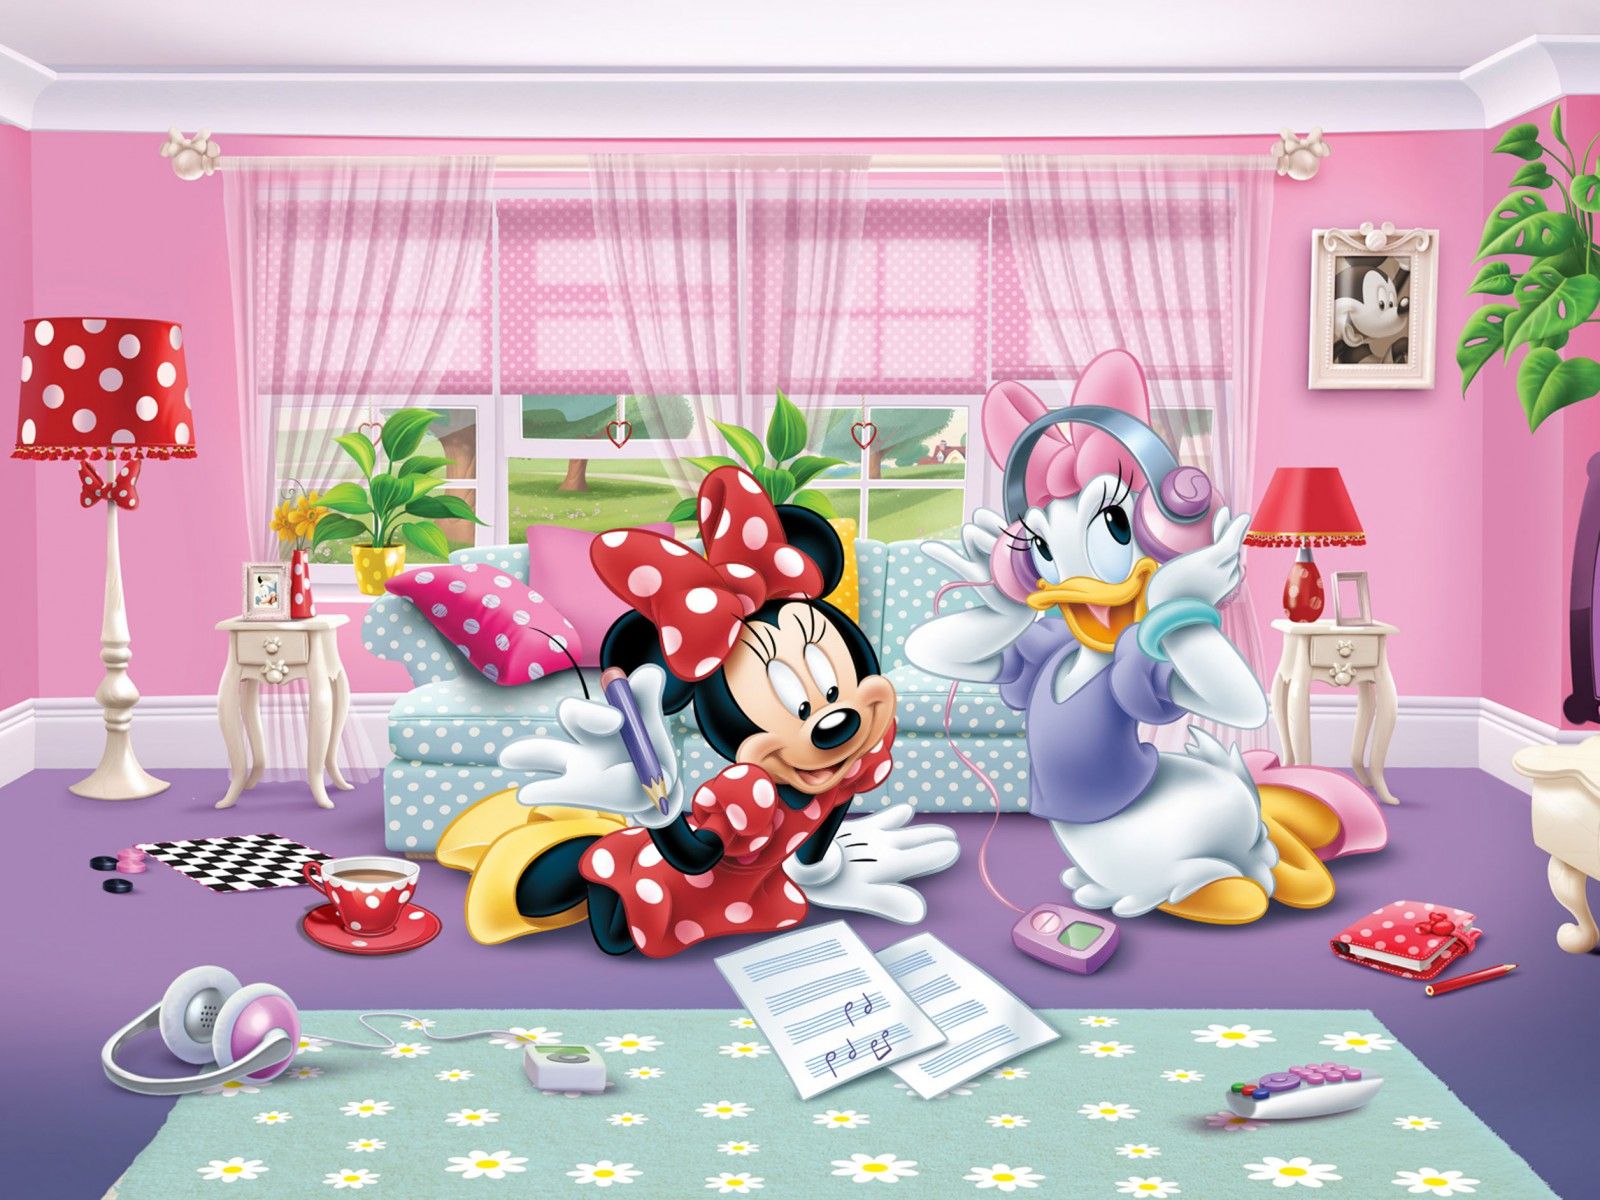 XXL Photo Wallpaper Mural Disney Minnie Mouse Daisy Duck. Daisy wallpaper, Kids room wallpaper, Disney mural